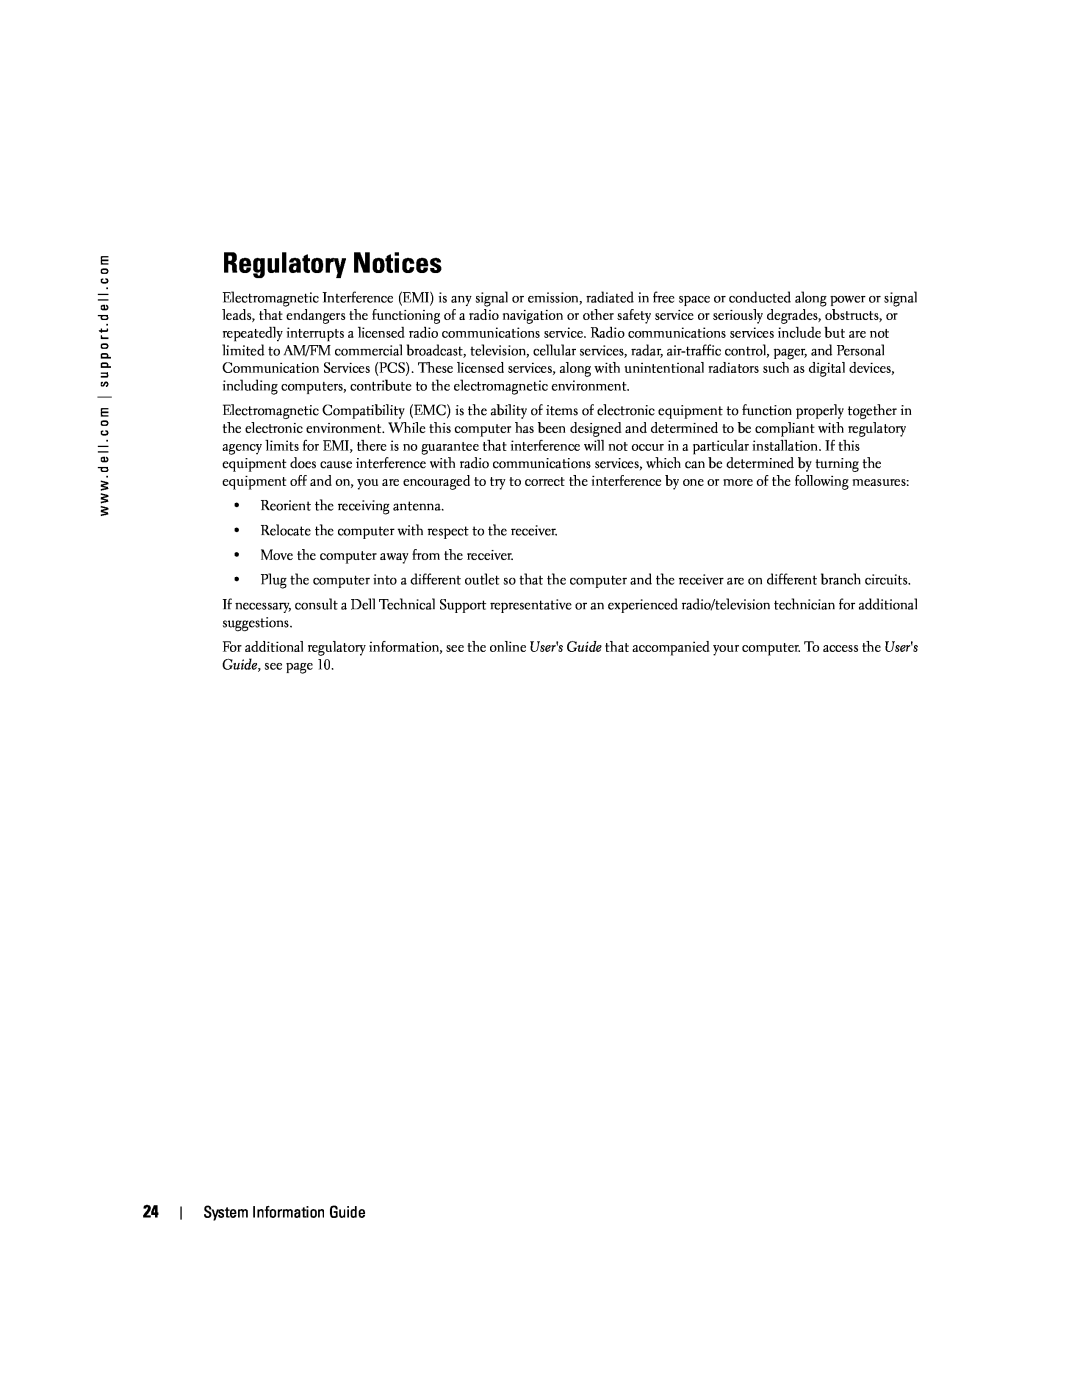 Dell D505 manual Regulatory Notices 